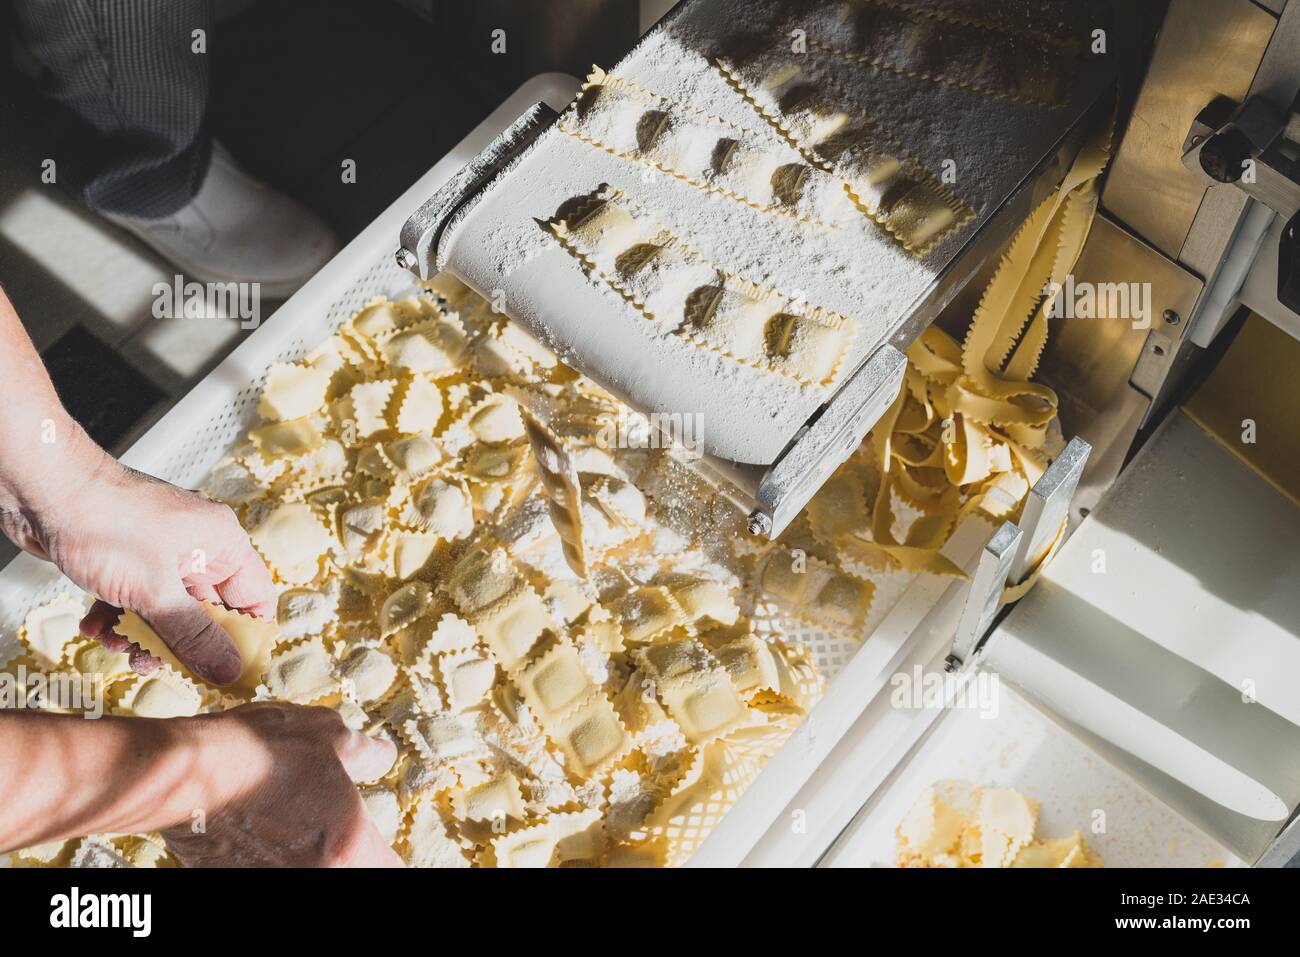 production process of ravioli, tortellini and cappelletti, typical Italian fresh pasta - the chef follows the production of ravioli from the machine Stock Photo